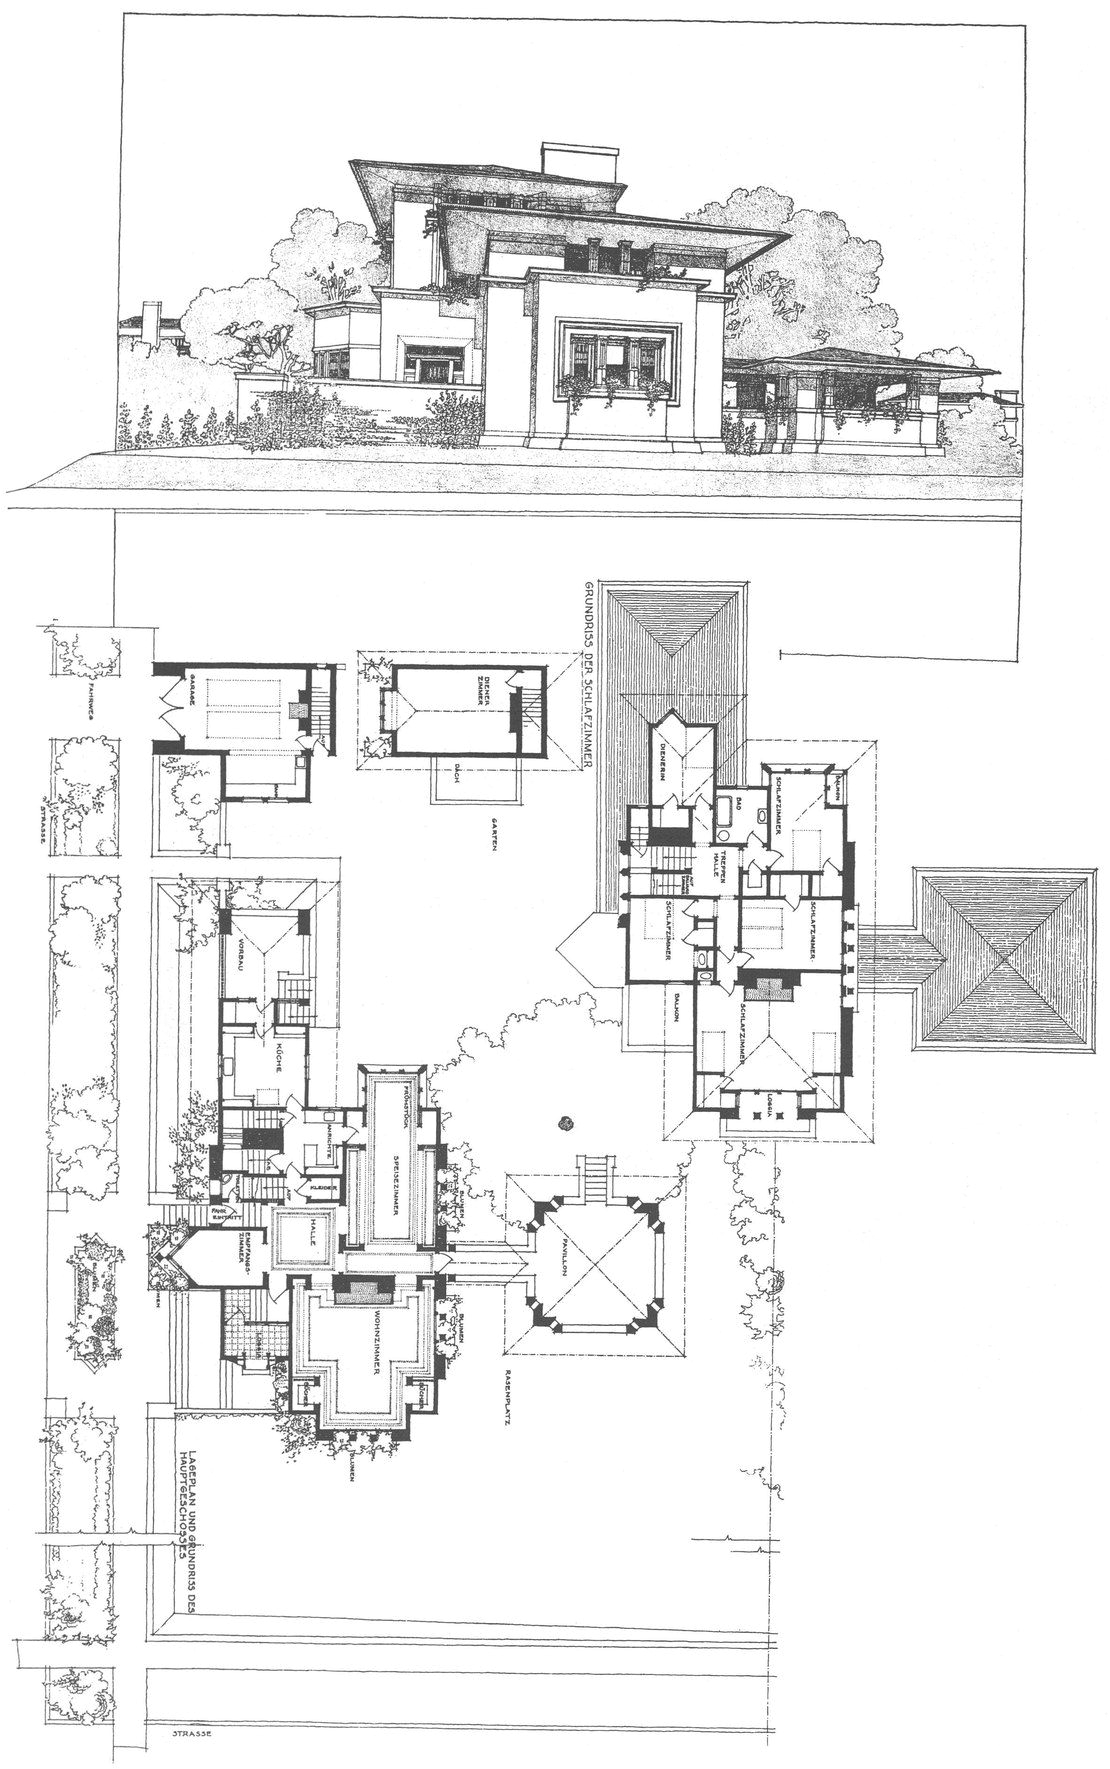 frank lloyd wright fricke house blueprint by blueprintplace on etsy